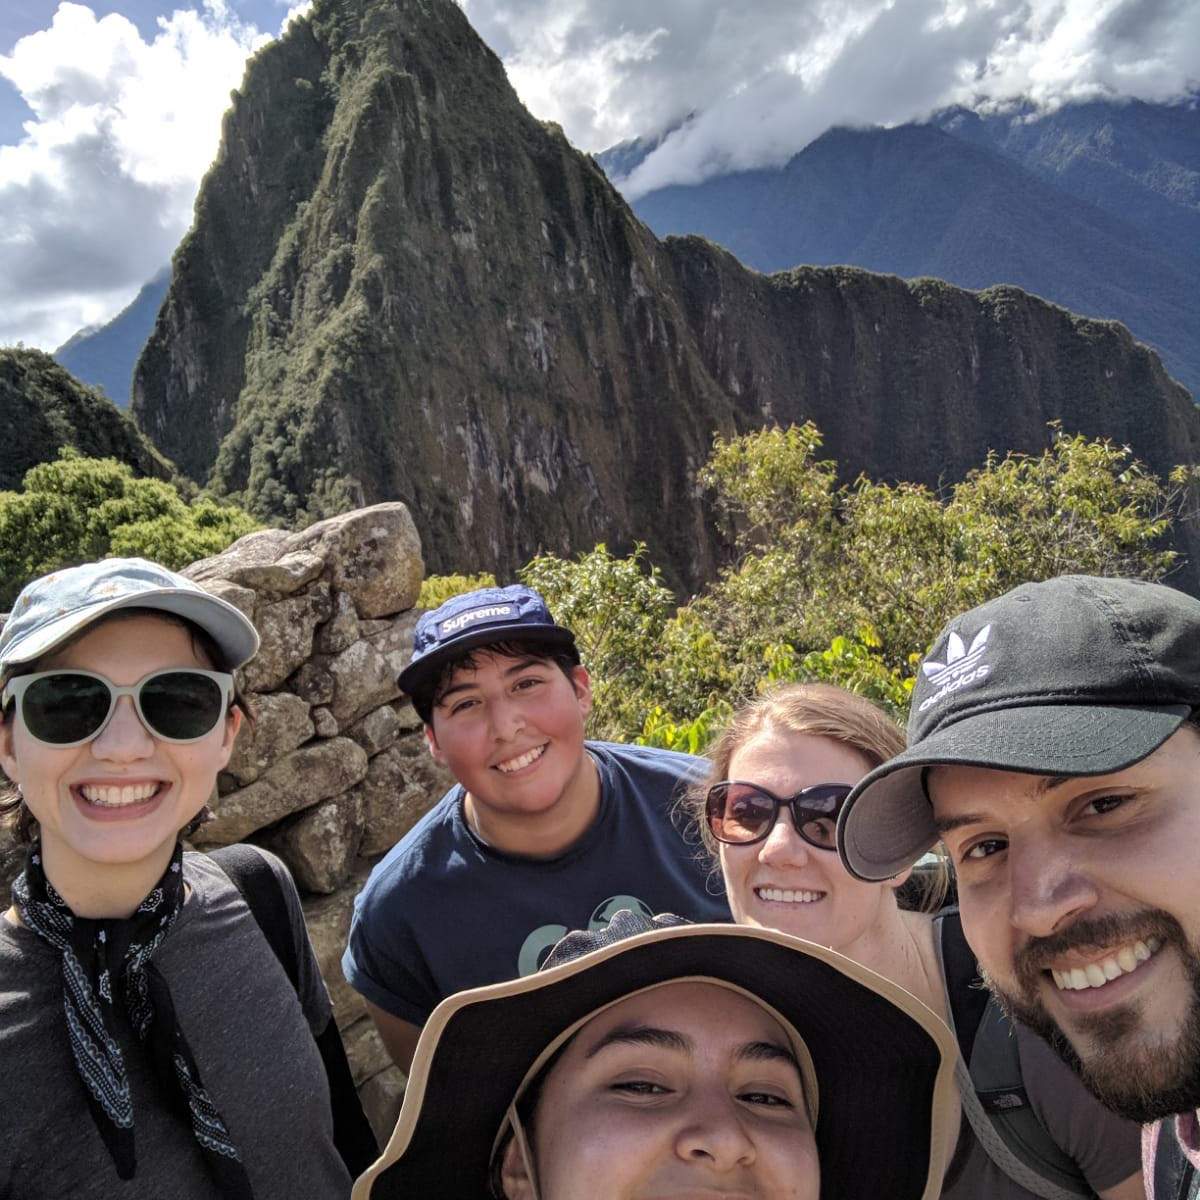 Students at Machu Picchu